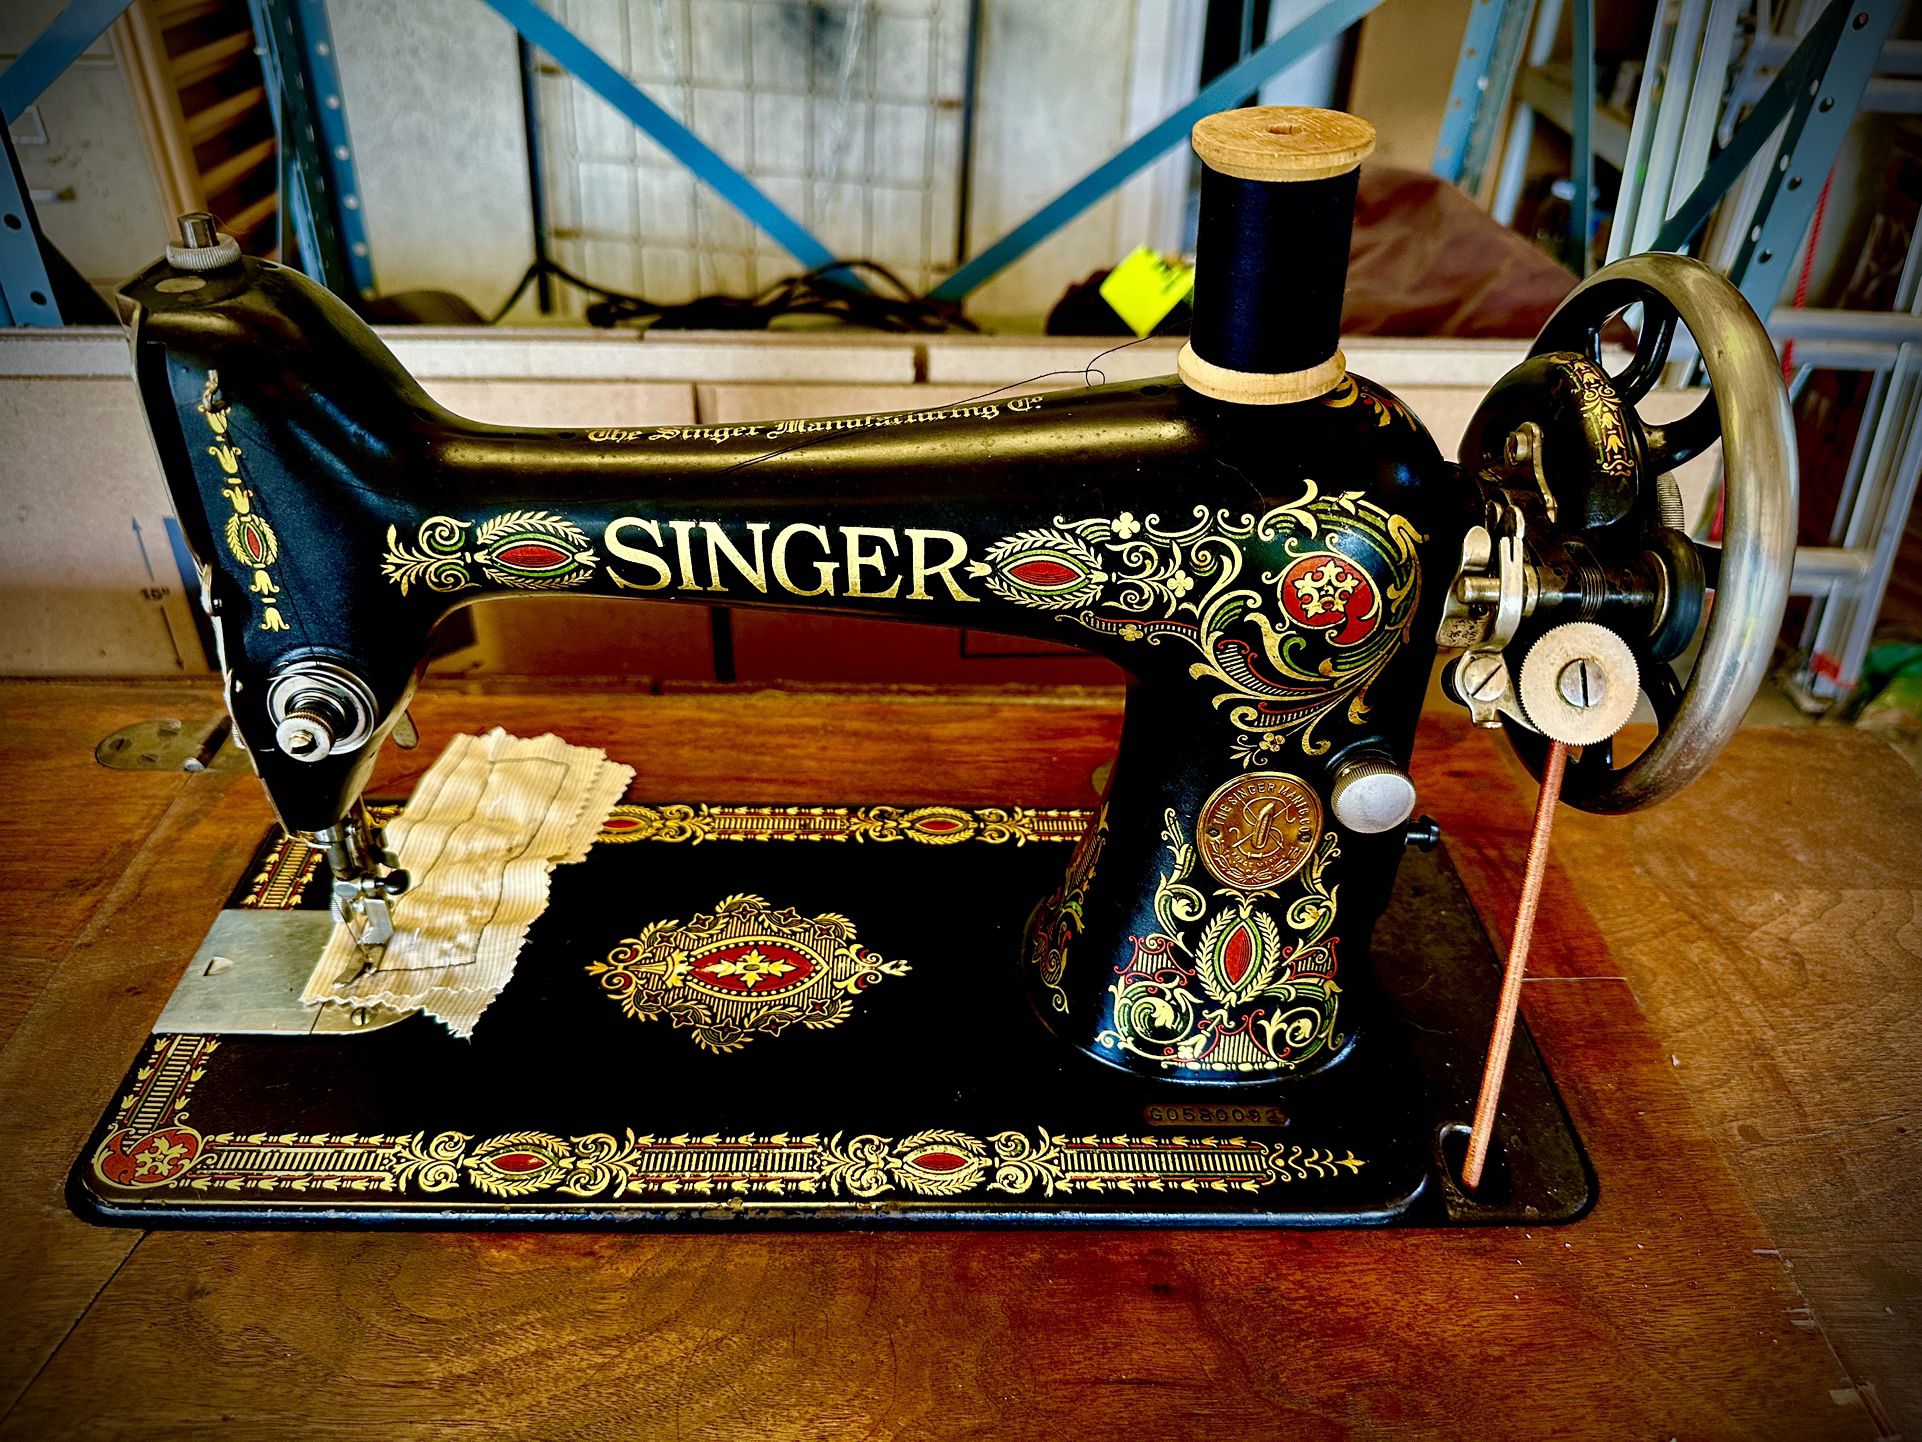 1910 Singer "Red Eye" treadle sewing machine.